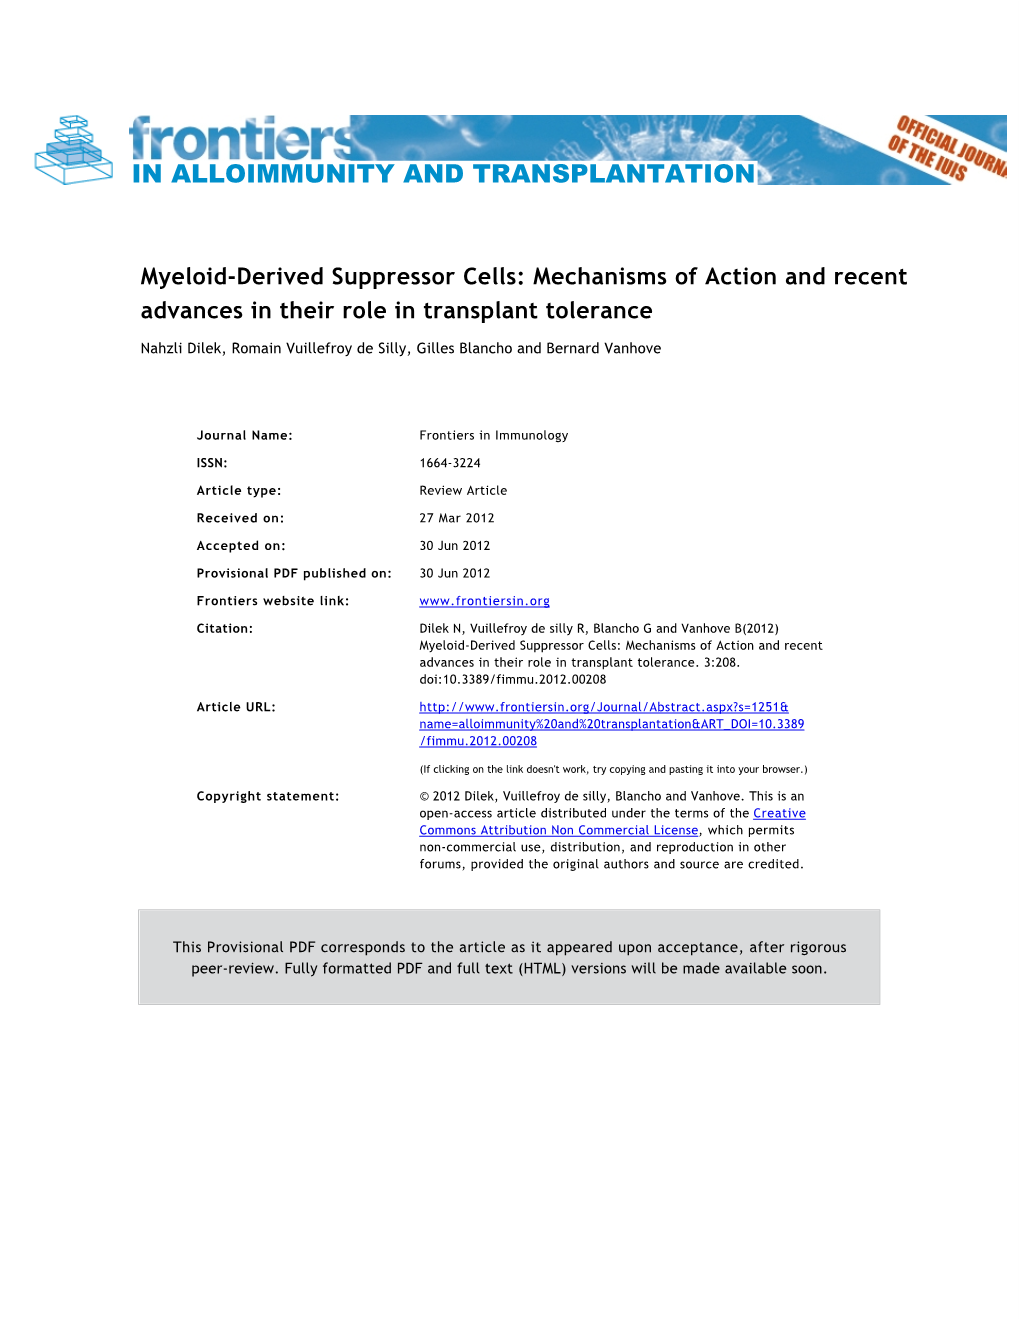 In Alloimmunity and Transplantation